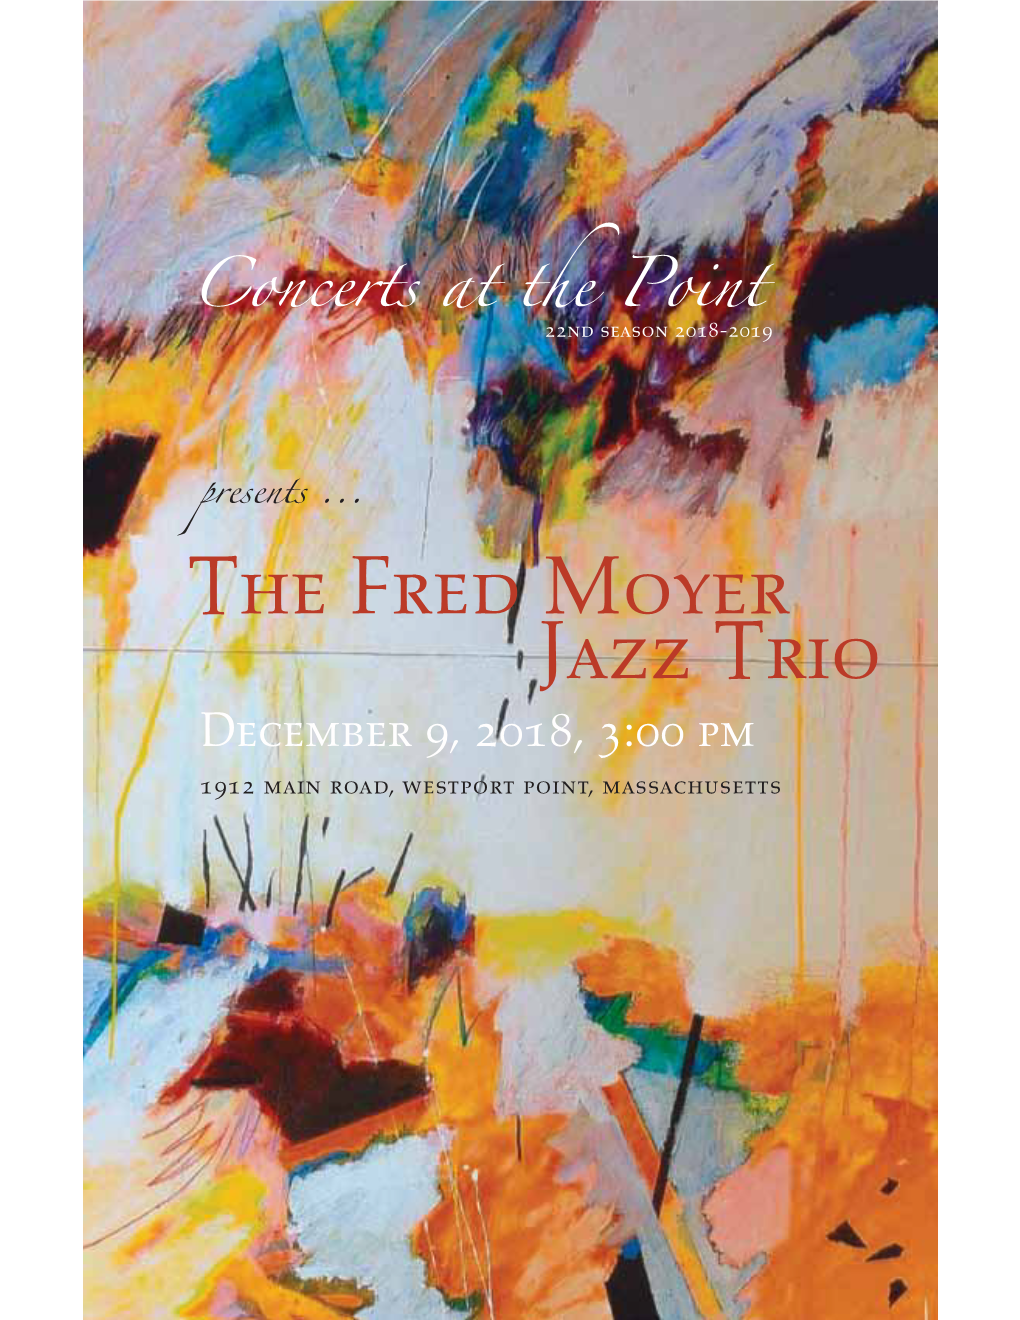 The Fred Moyer Jazz Trio